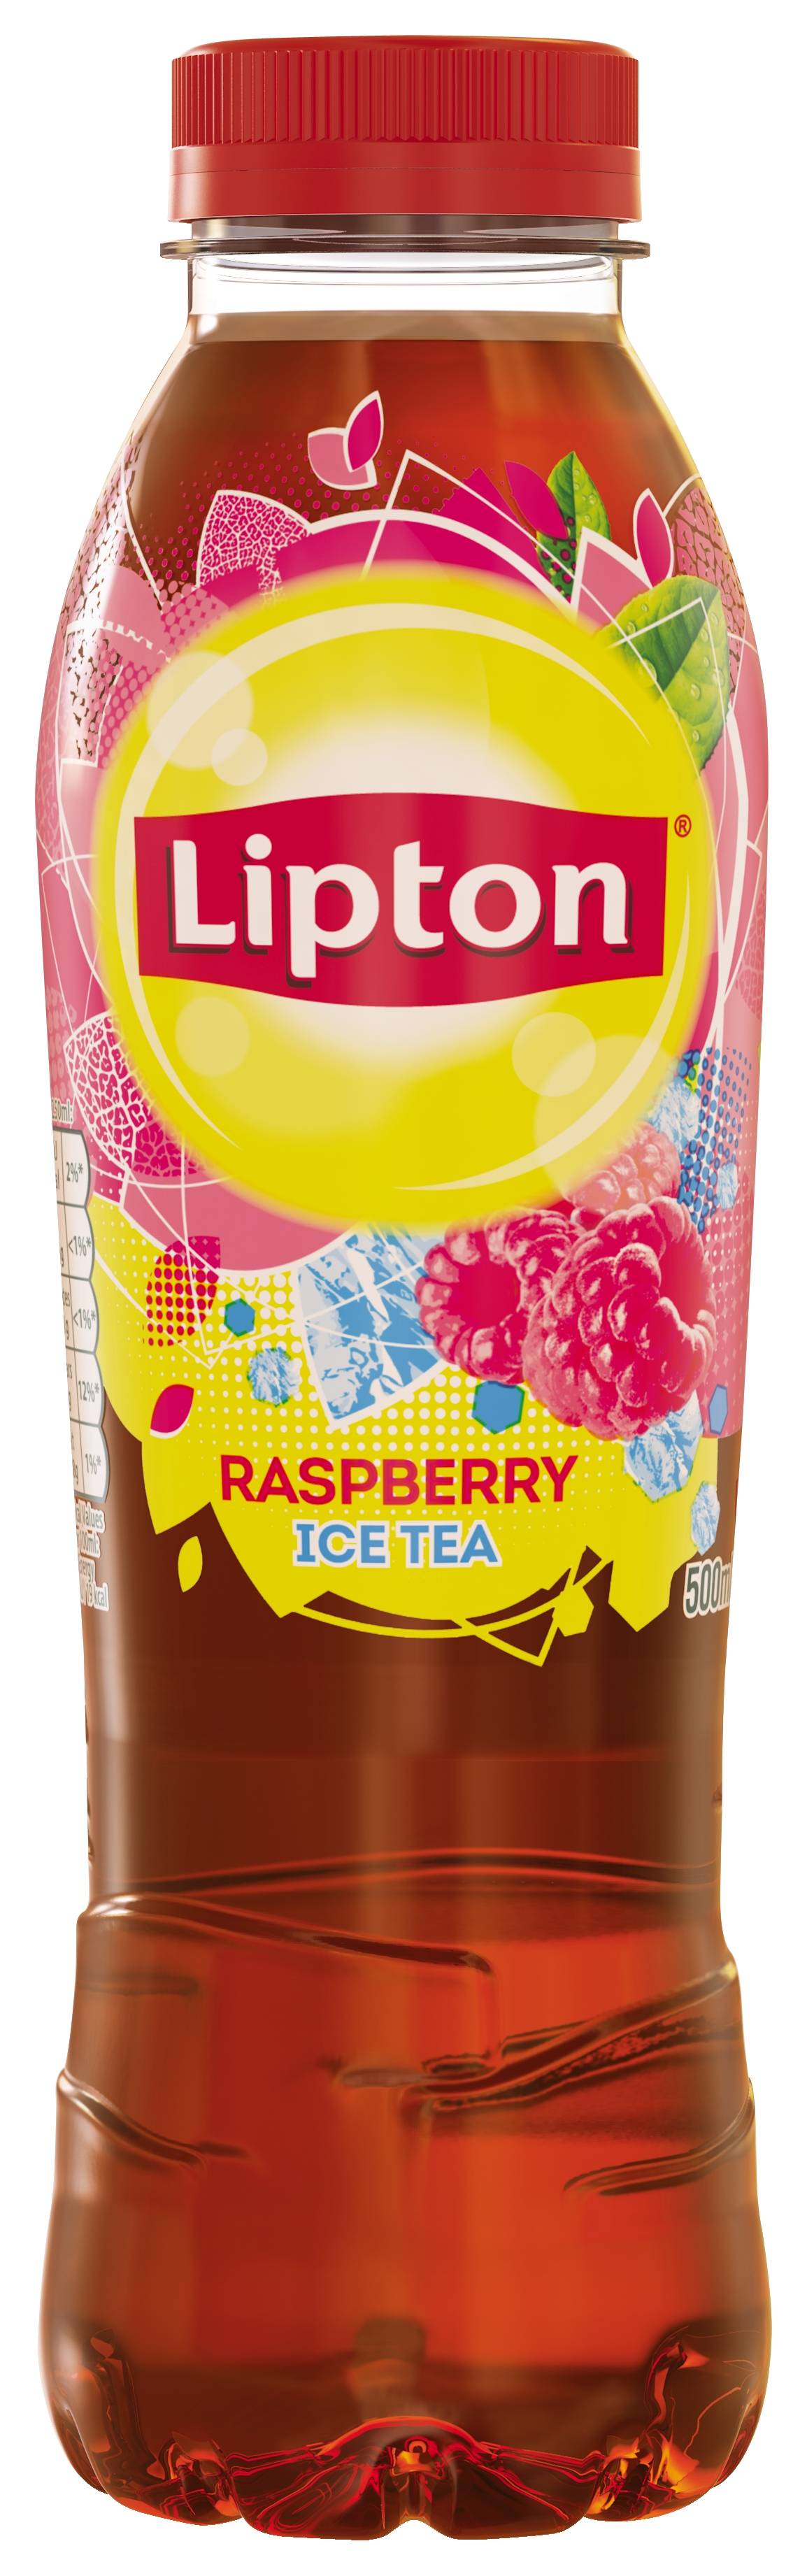 Lipton-Raspberry-500ml